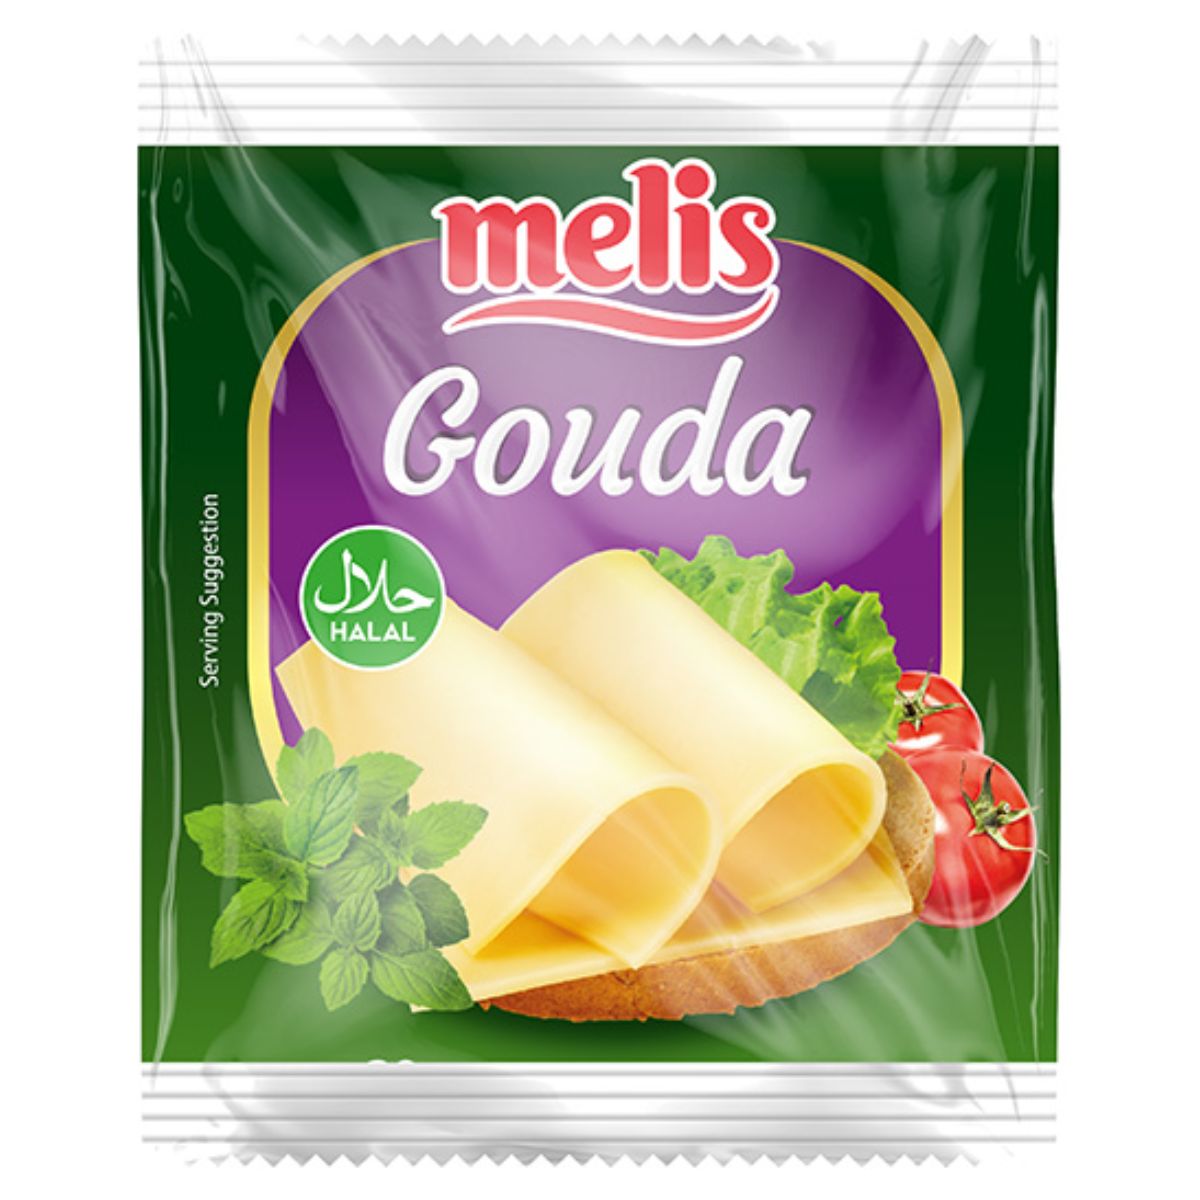 Melis - Gouda Sliced Cheese - 130g with tomato and basil.